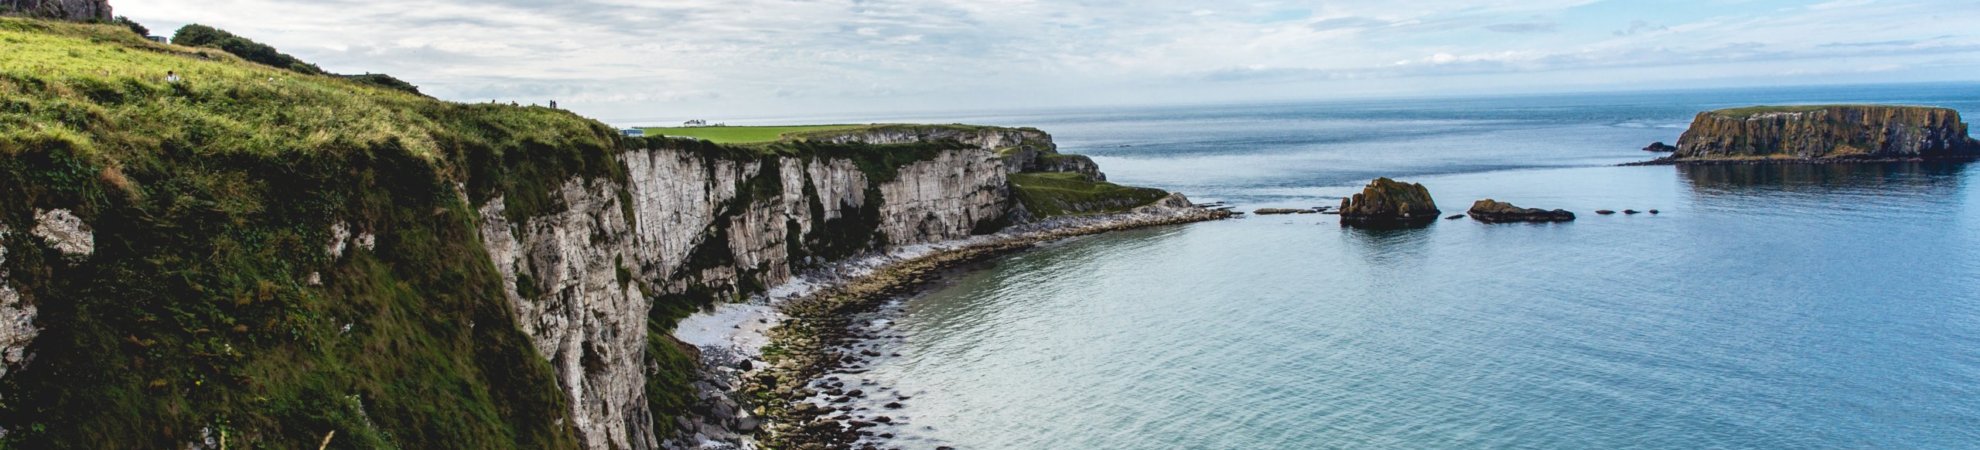 Best Coastal Walks in Ireland